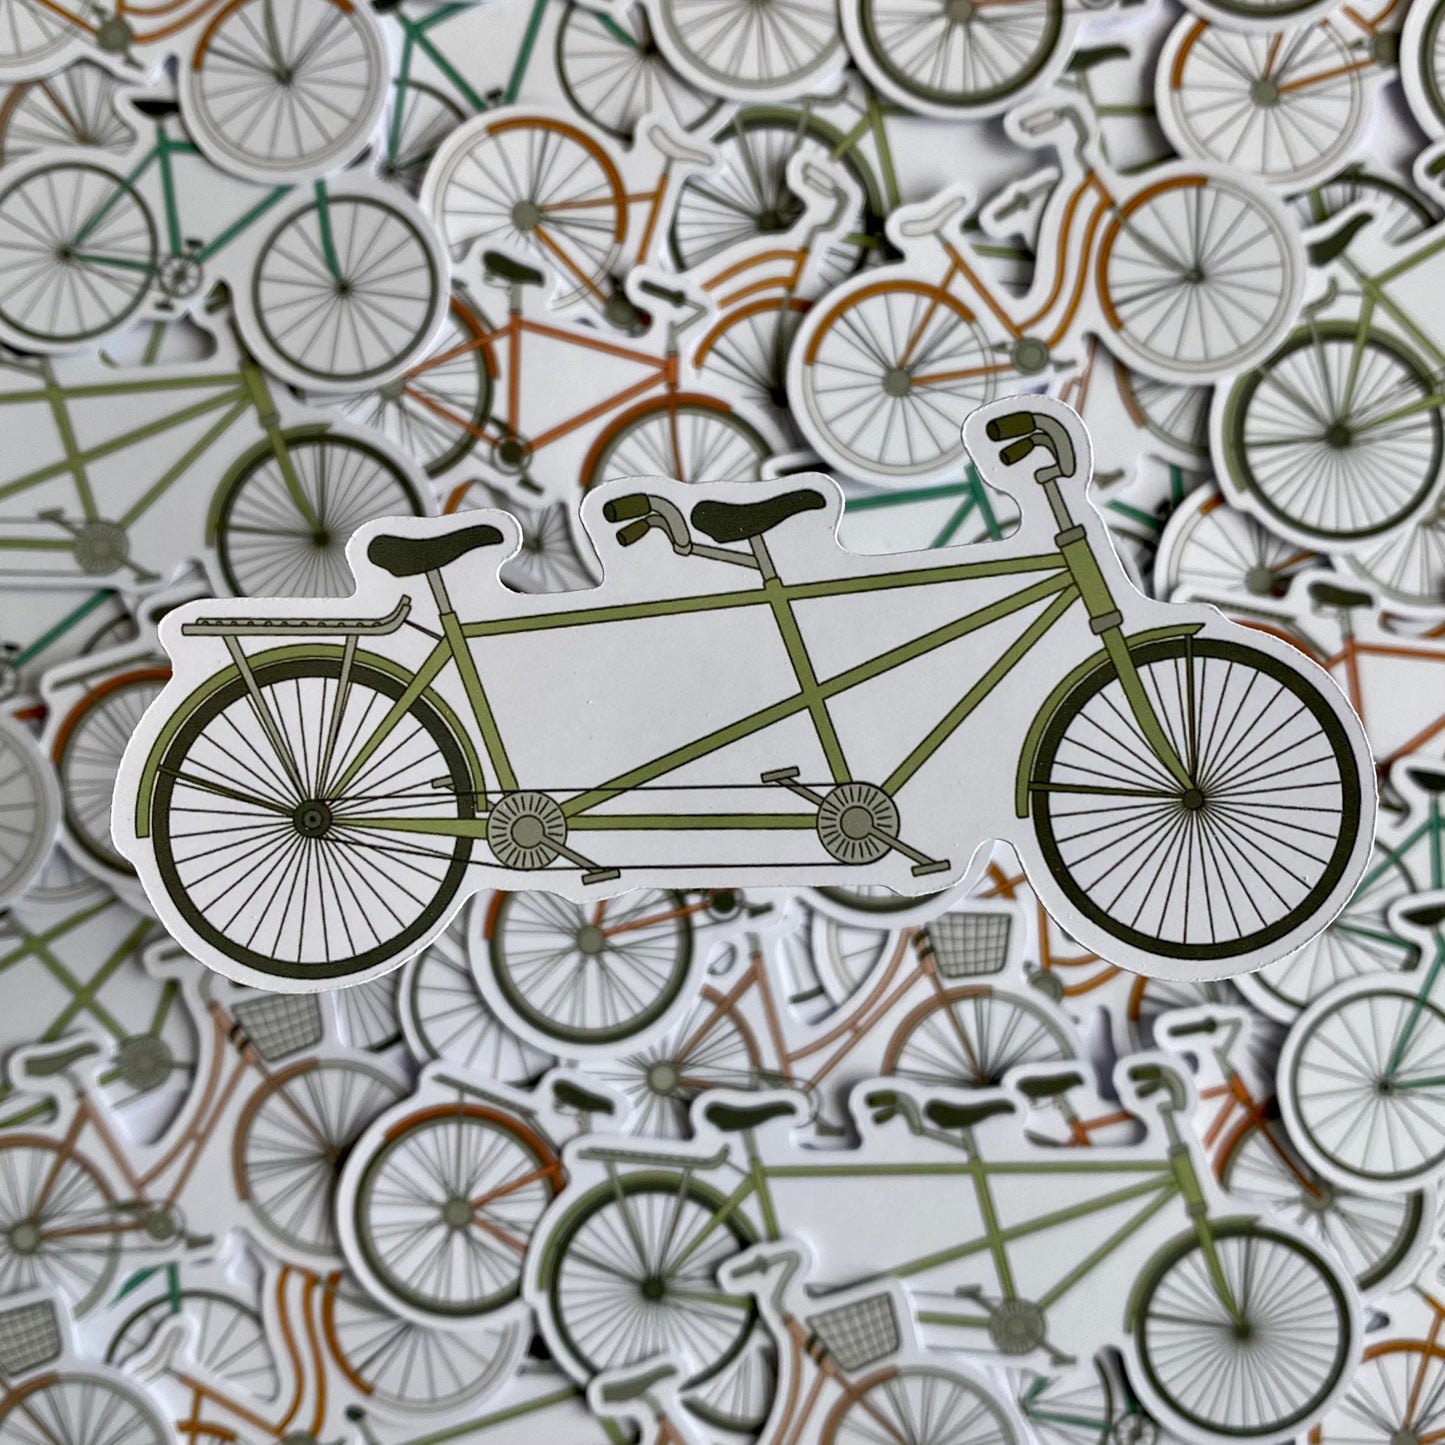 Bicycle | sticker set of 5